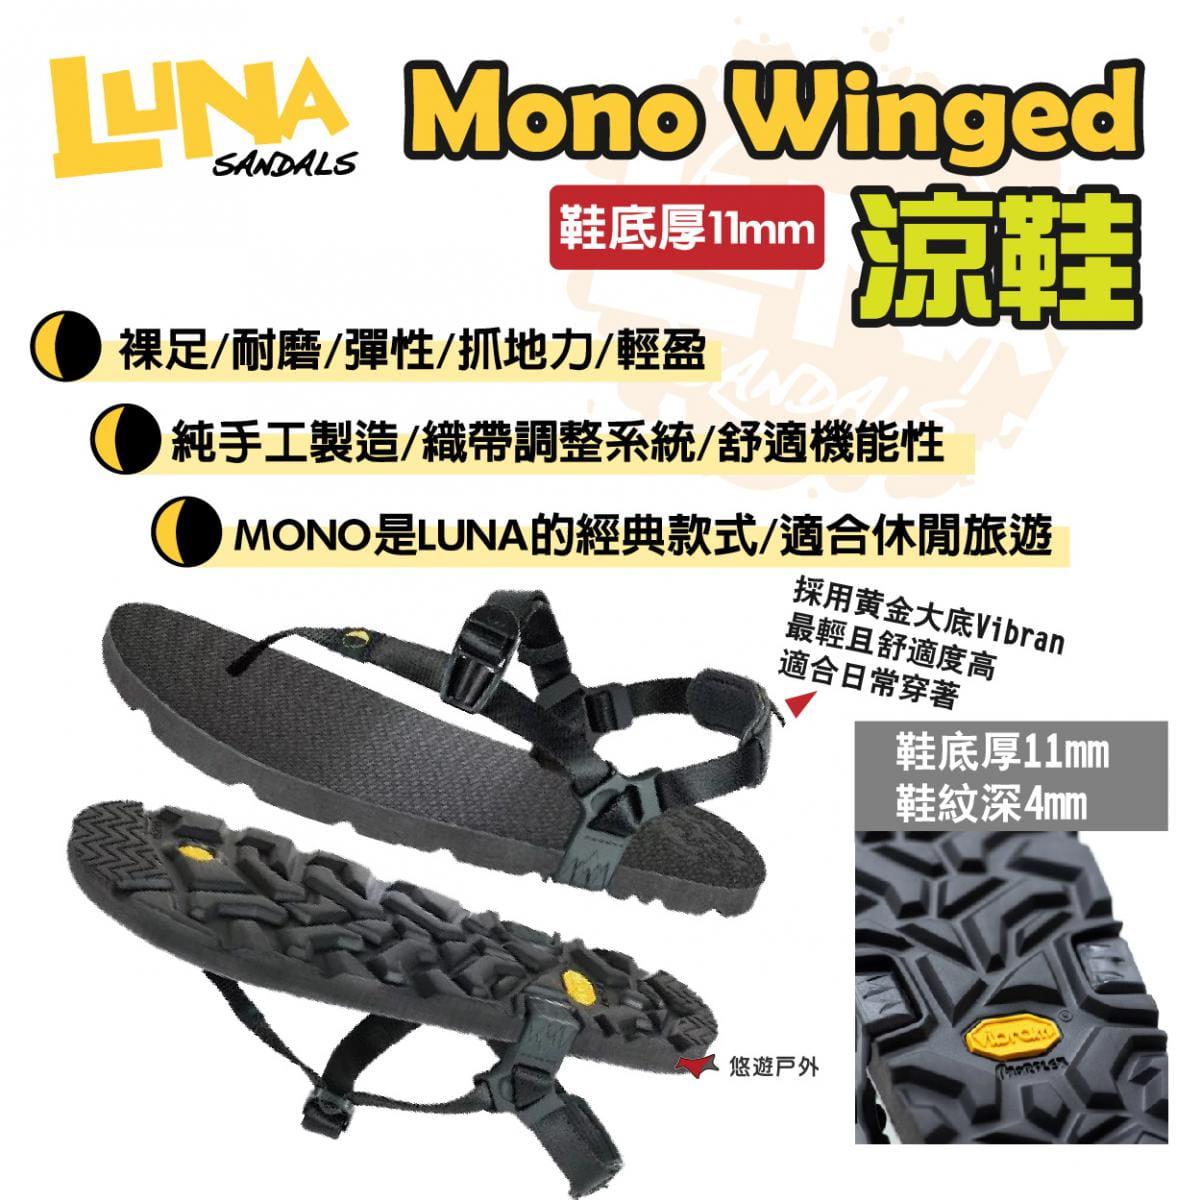 【Luna Sandals】Mono Winged 涼鞋 悠遊戶外 1